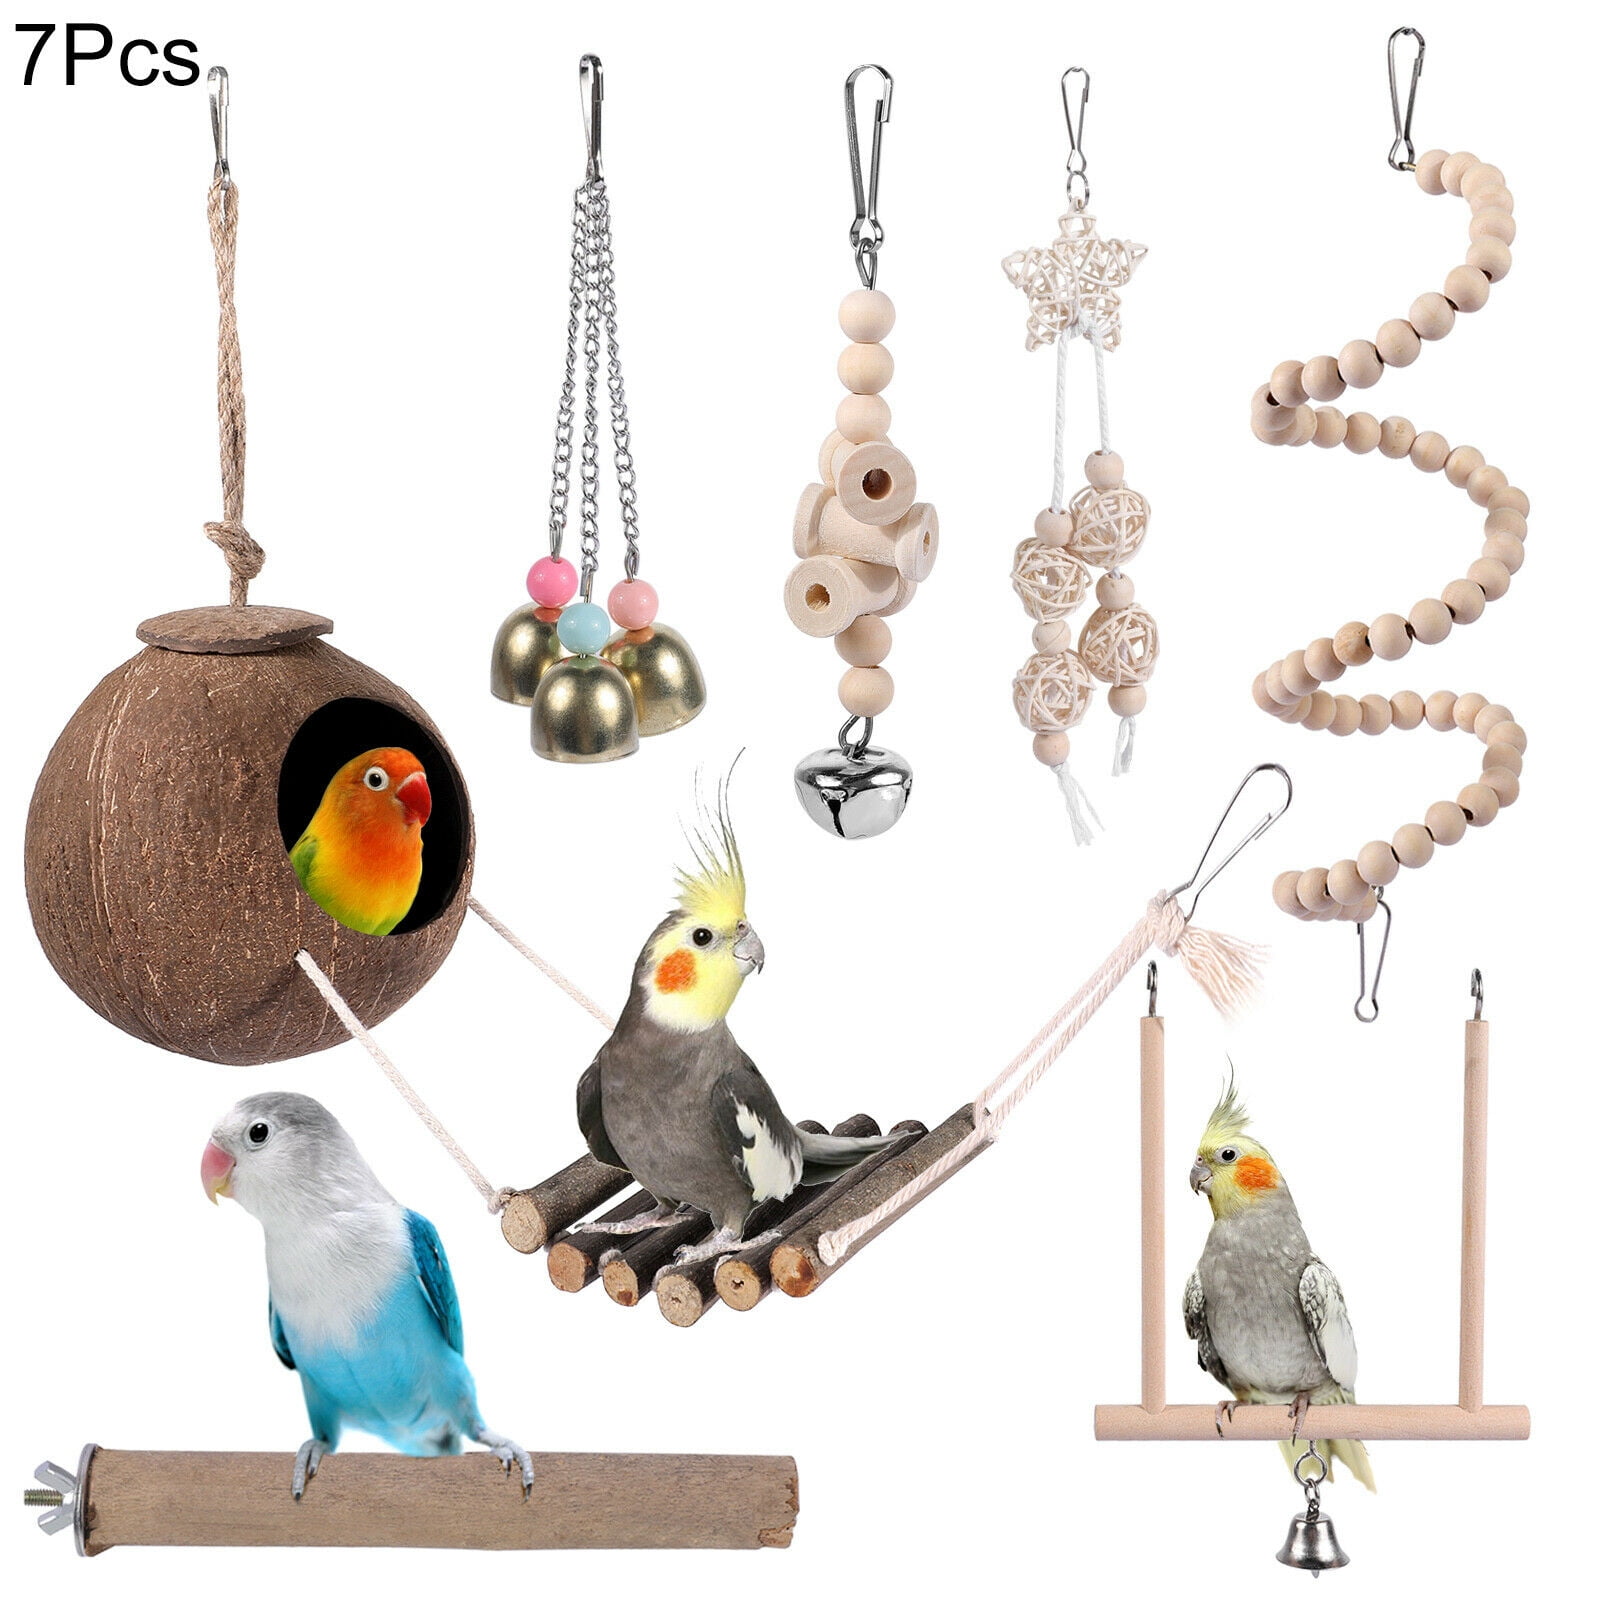 Balacoo Bird Puzzle Toys Intesligence Training Blocks Parrot Educational Accessories